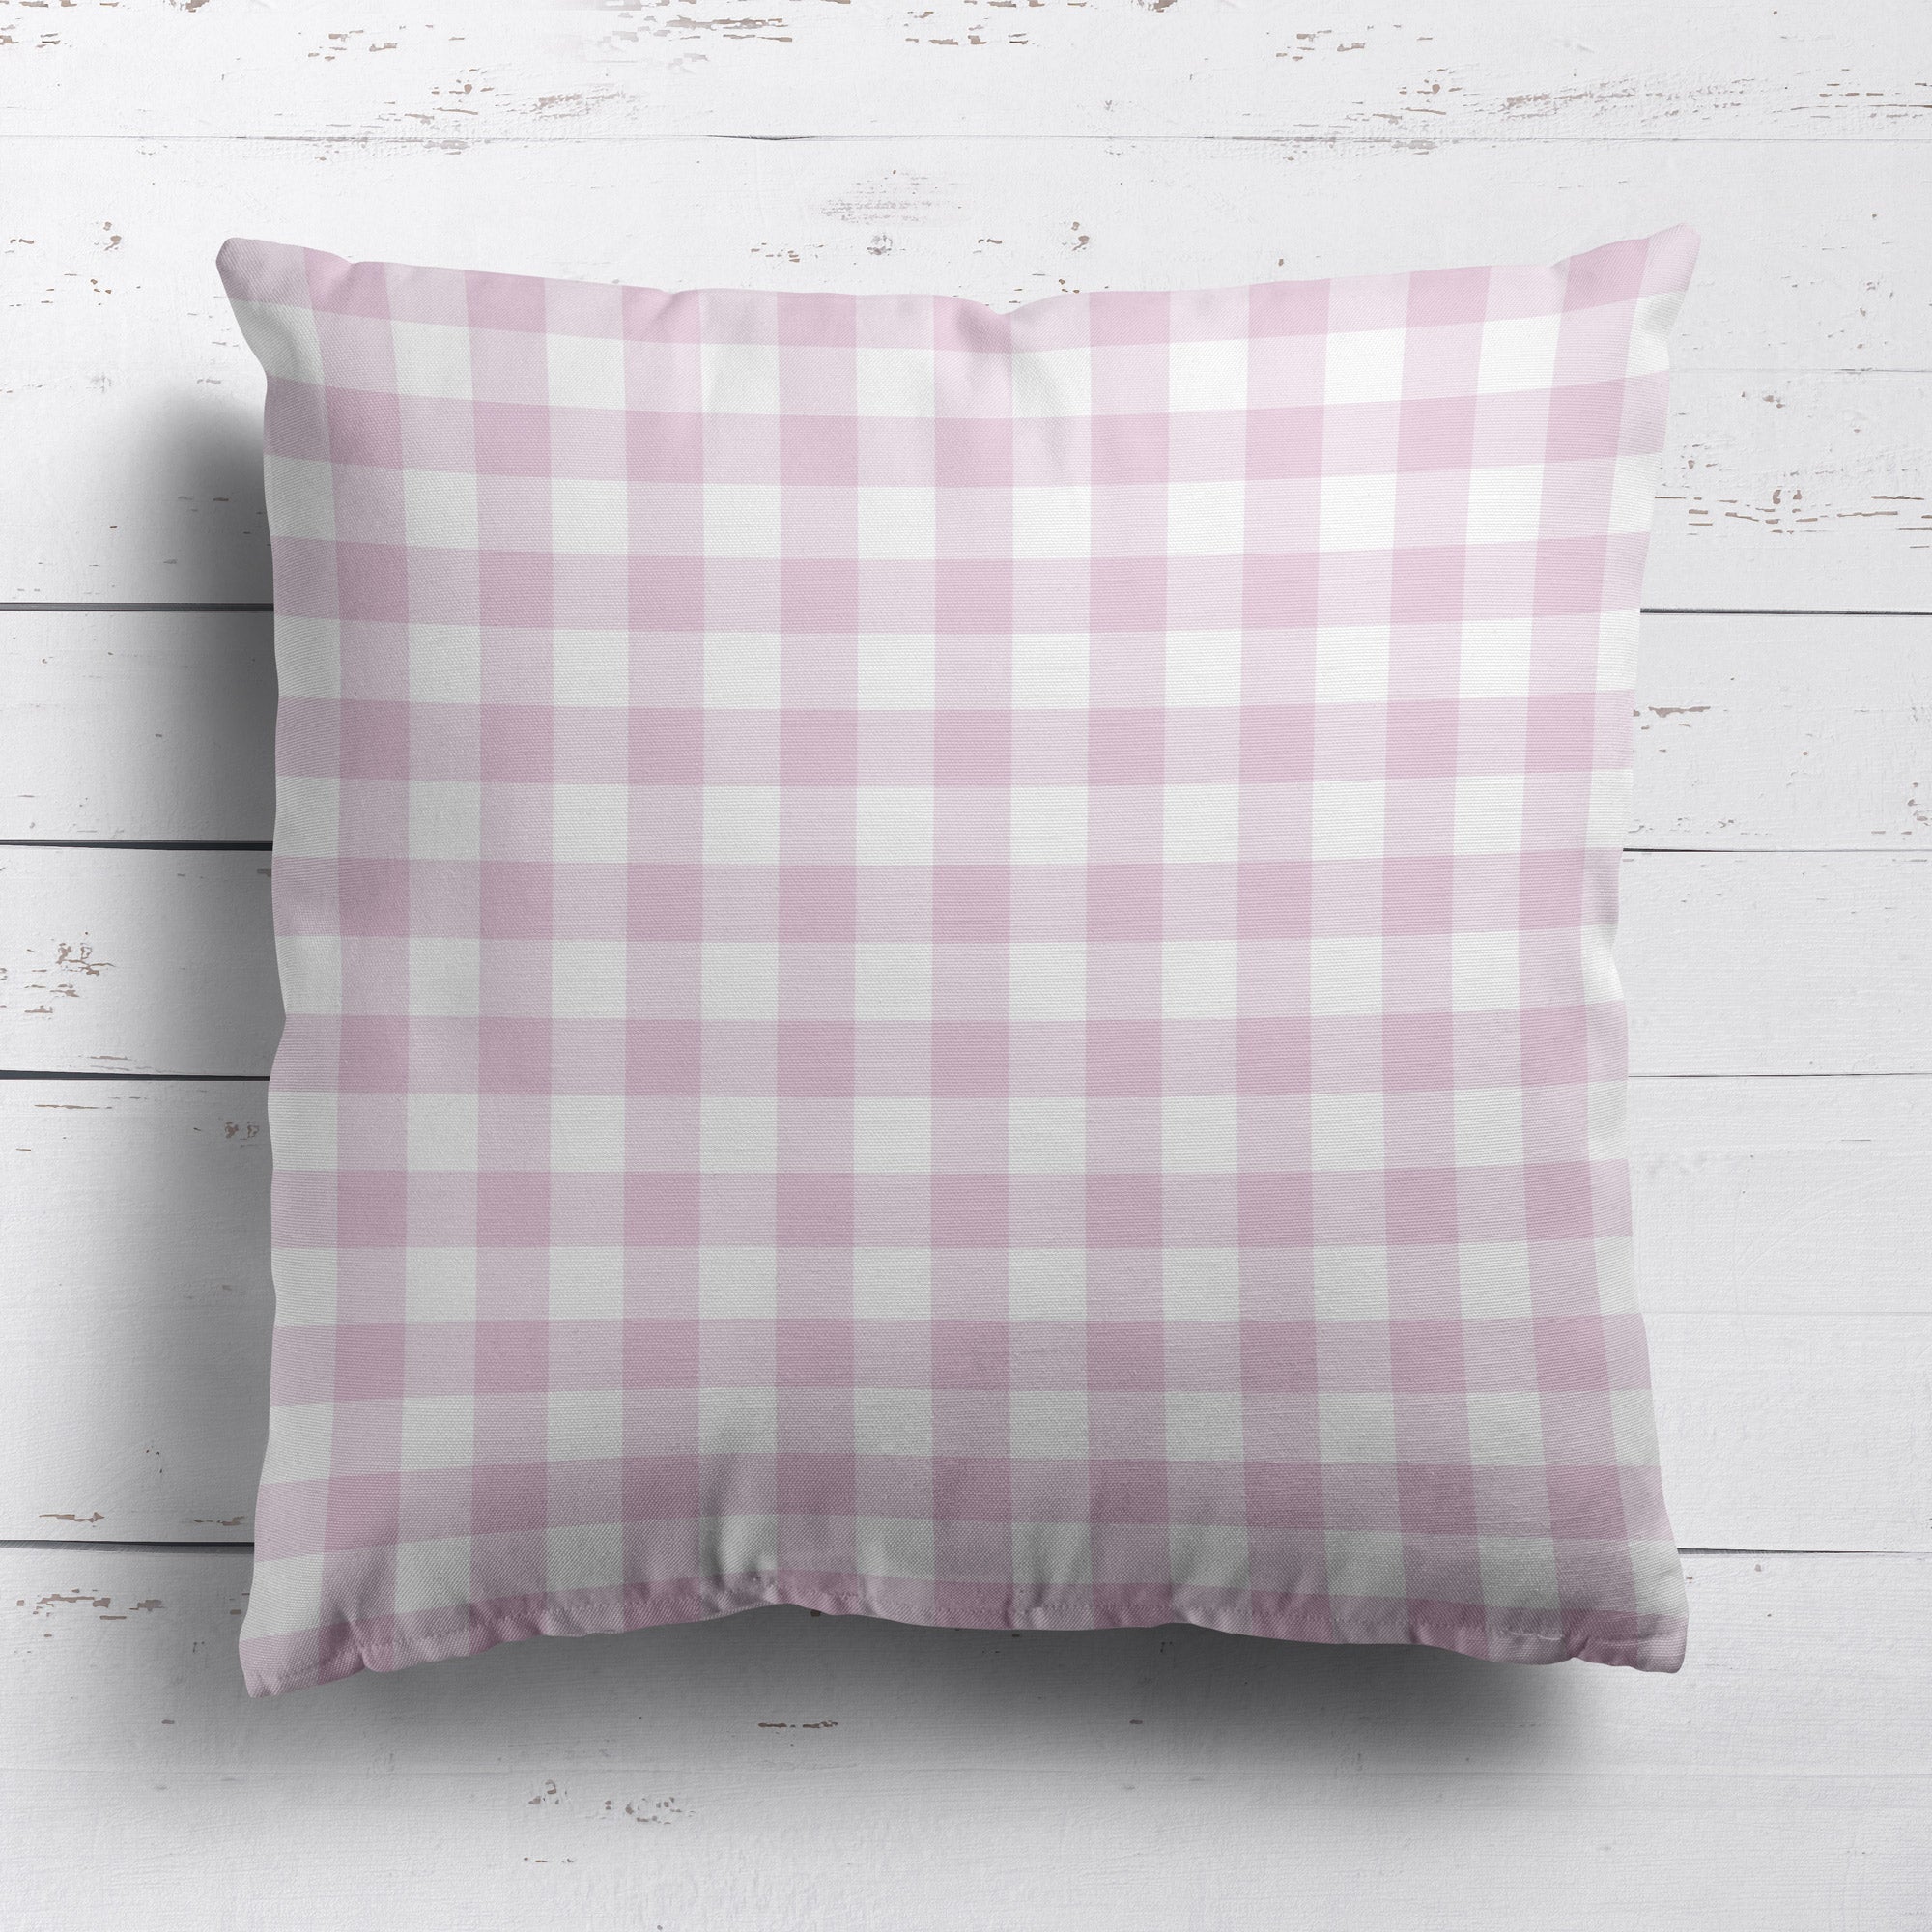 Gingham Check Small Cushion - Pinks - Hydrangea Lane Home